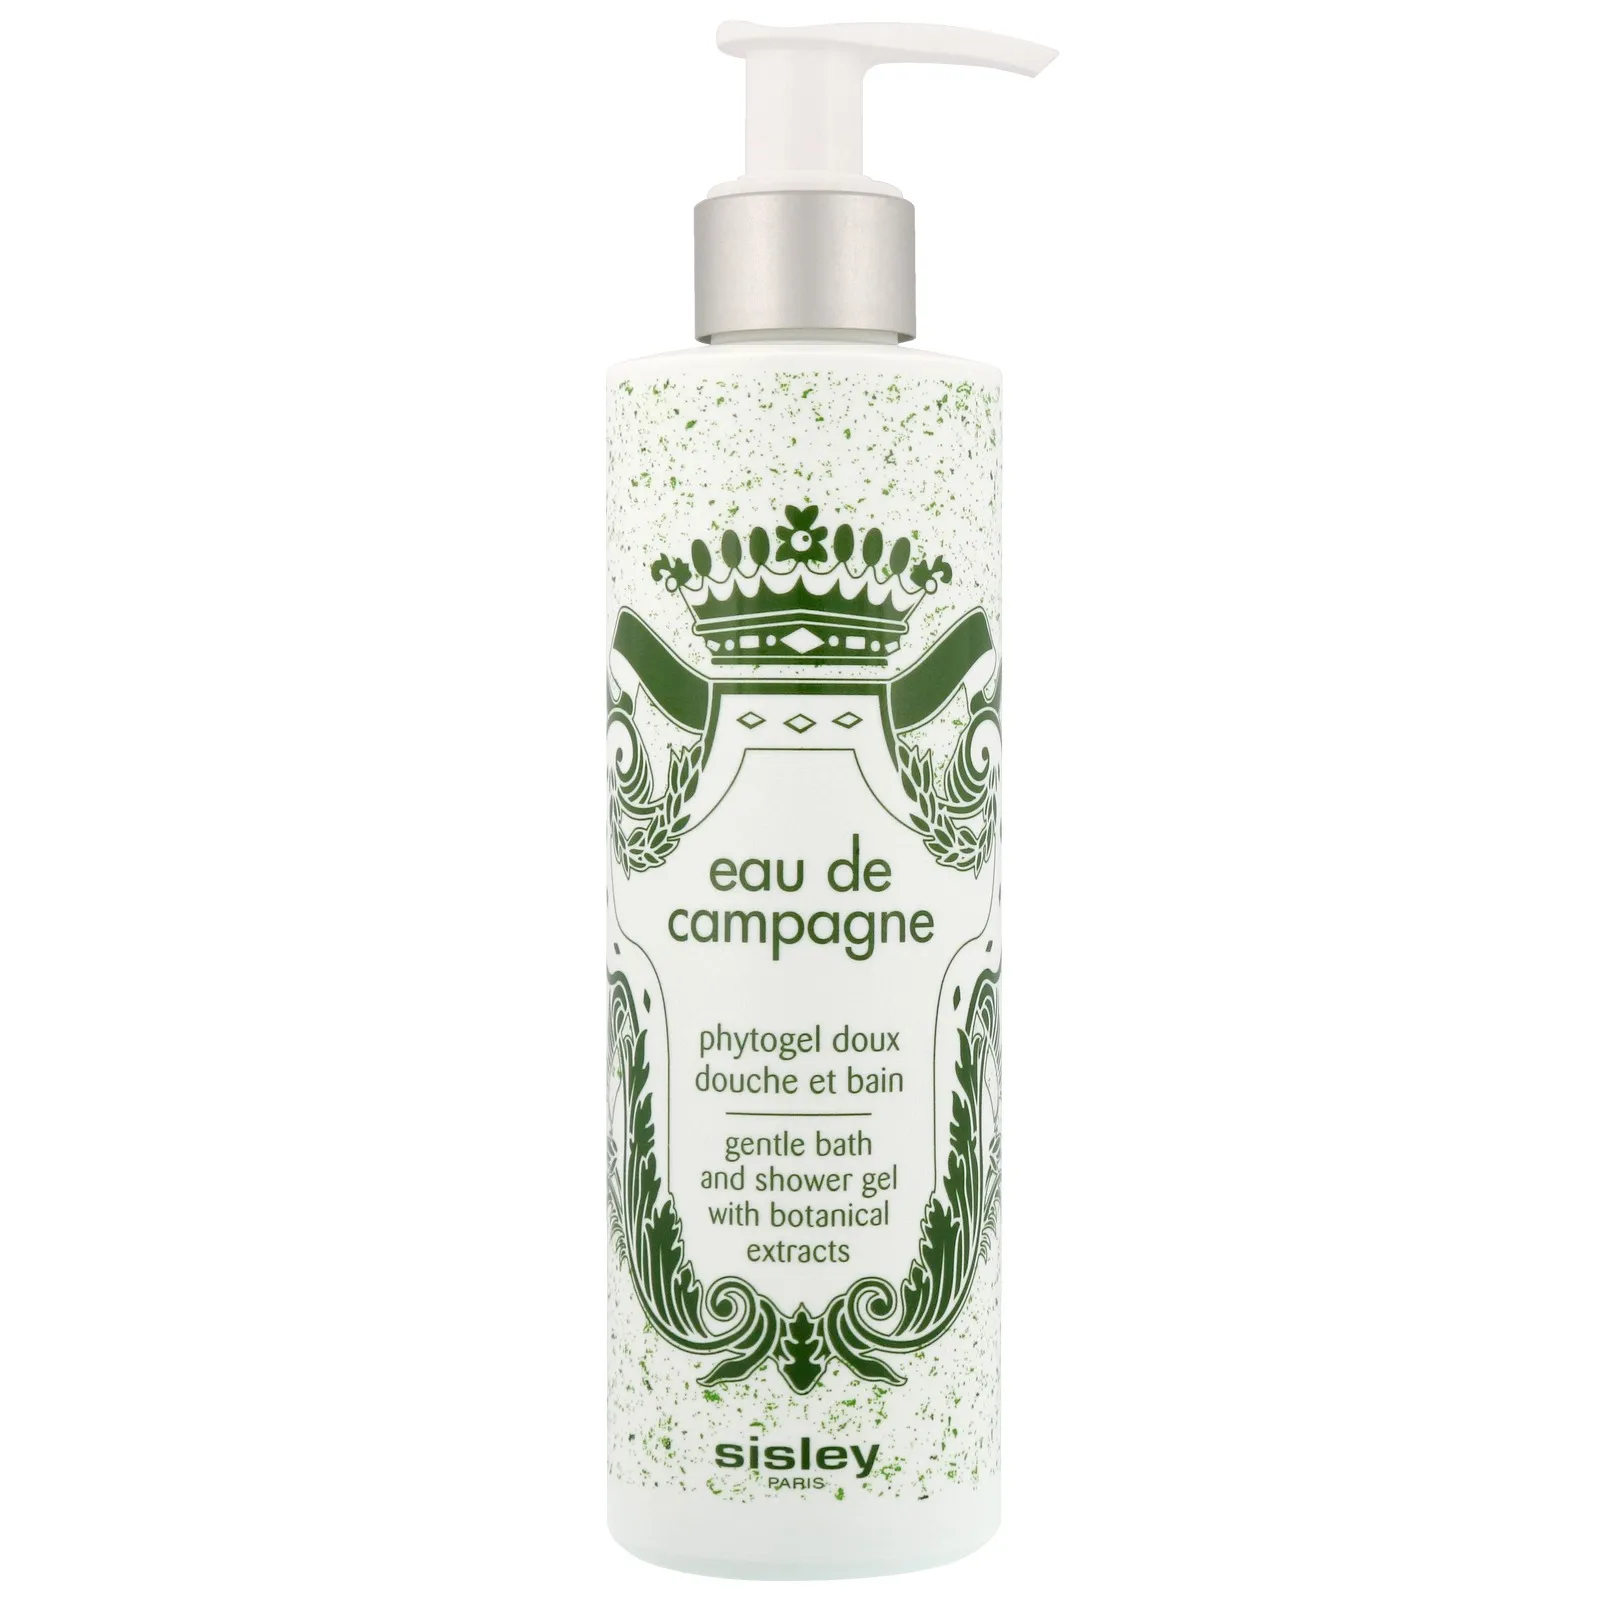 Eau de Campagne Bath & Shower Gel by Sisley, one of the best French shower gels.